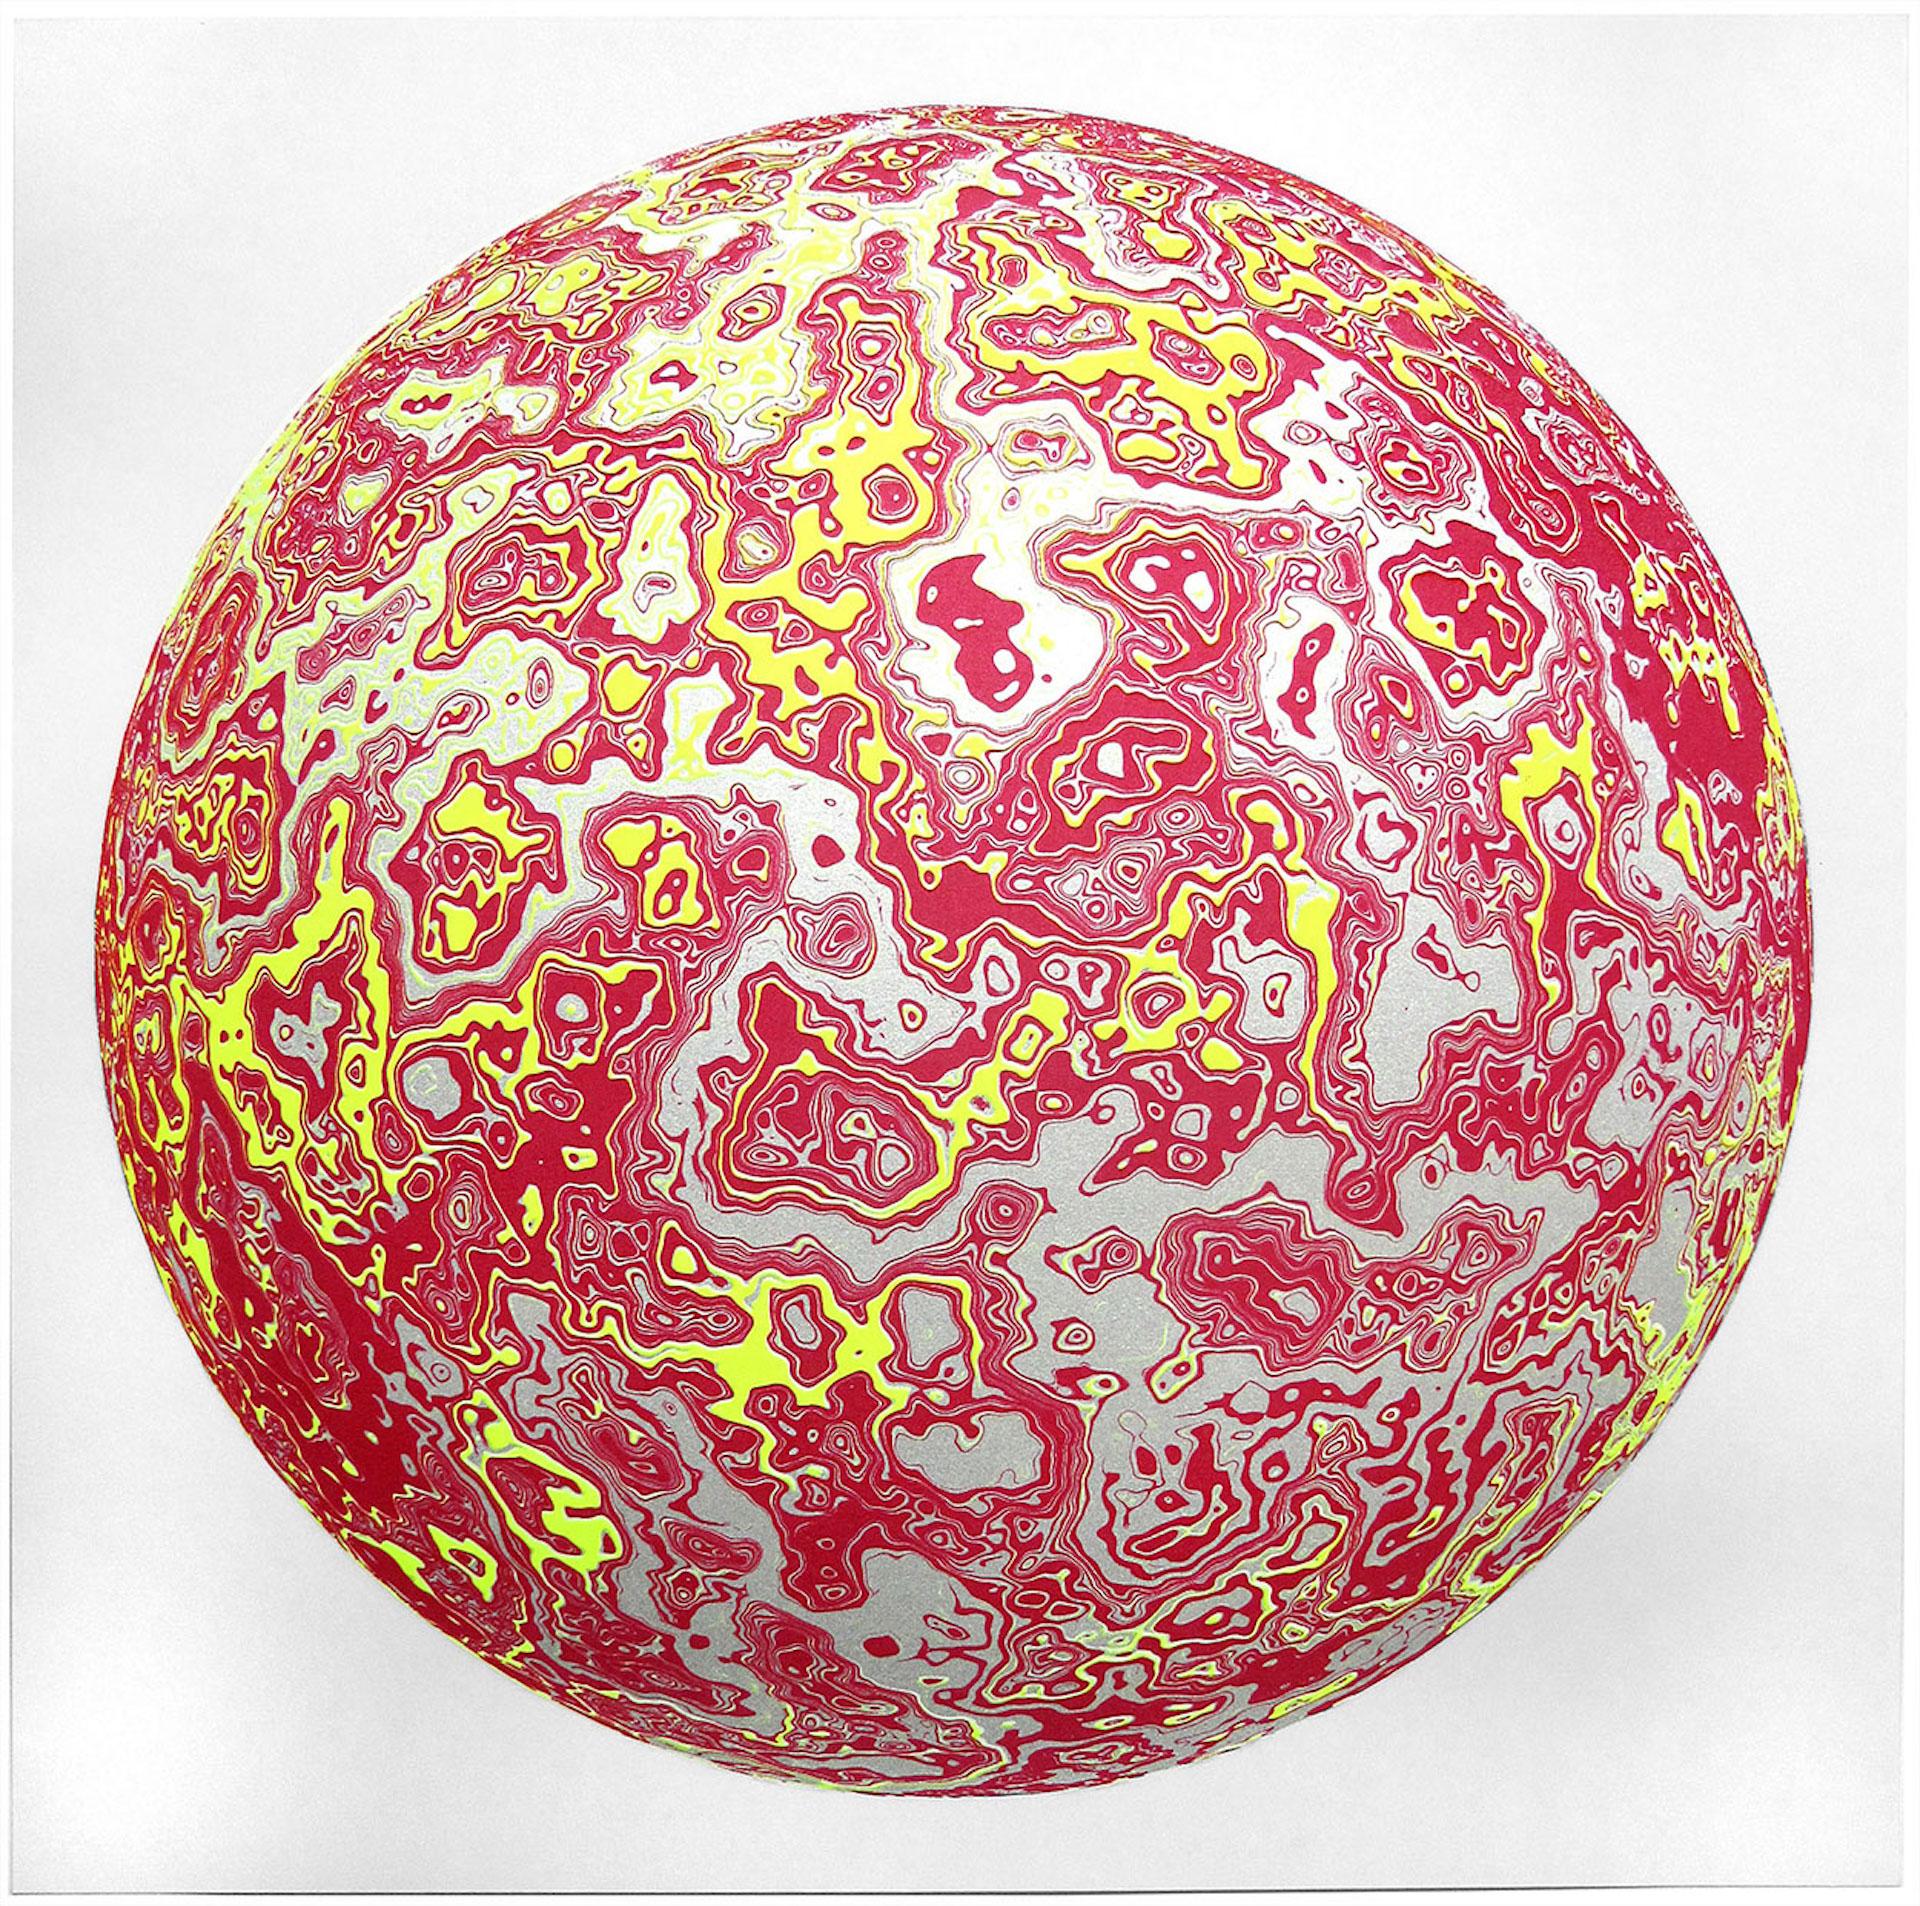 Chris Keegan  Abstract Print - Chris Keegan, Sphere, Space Art, Geomtric Art, Bright Affordable Art